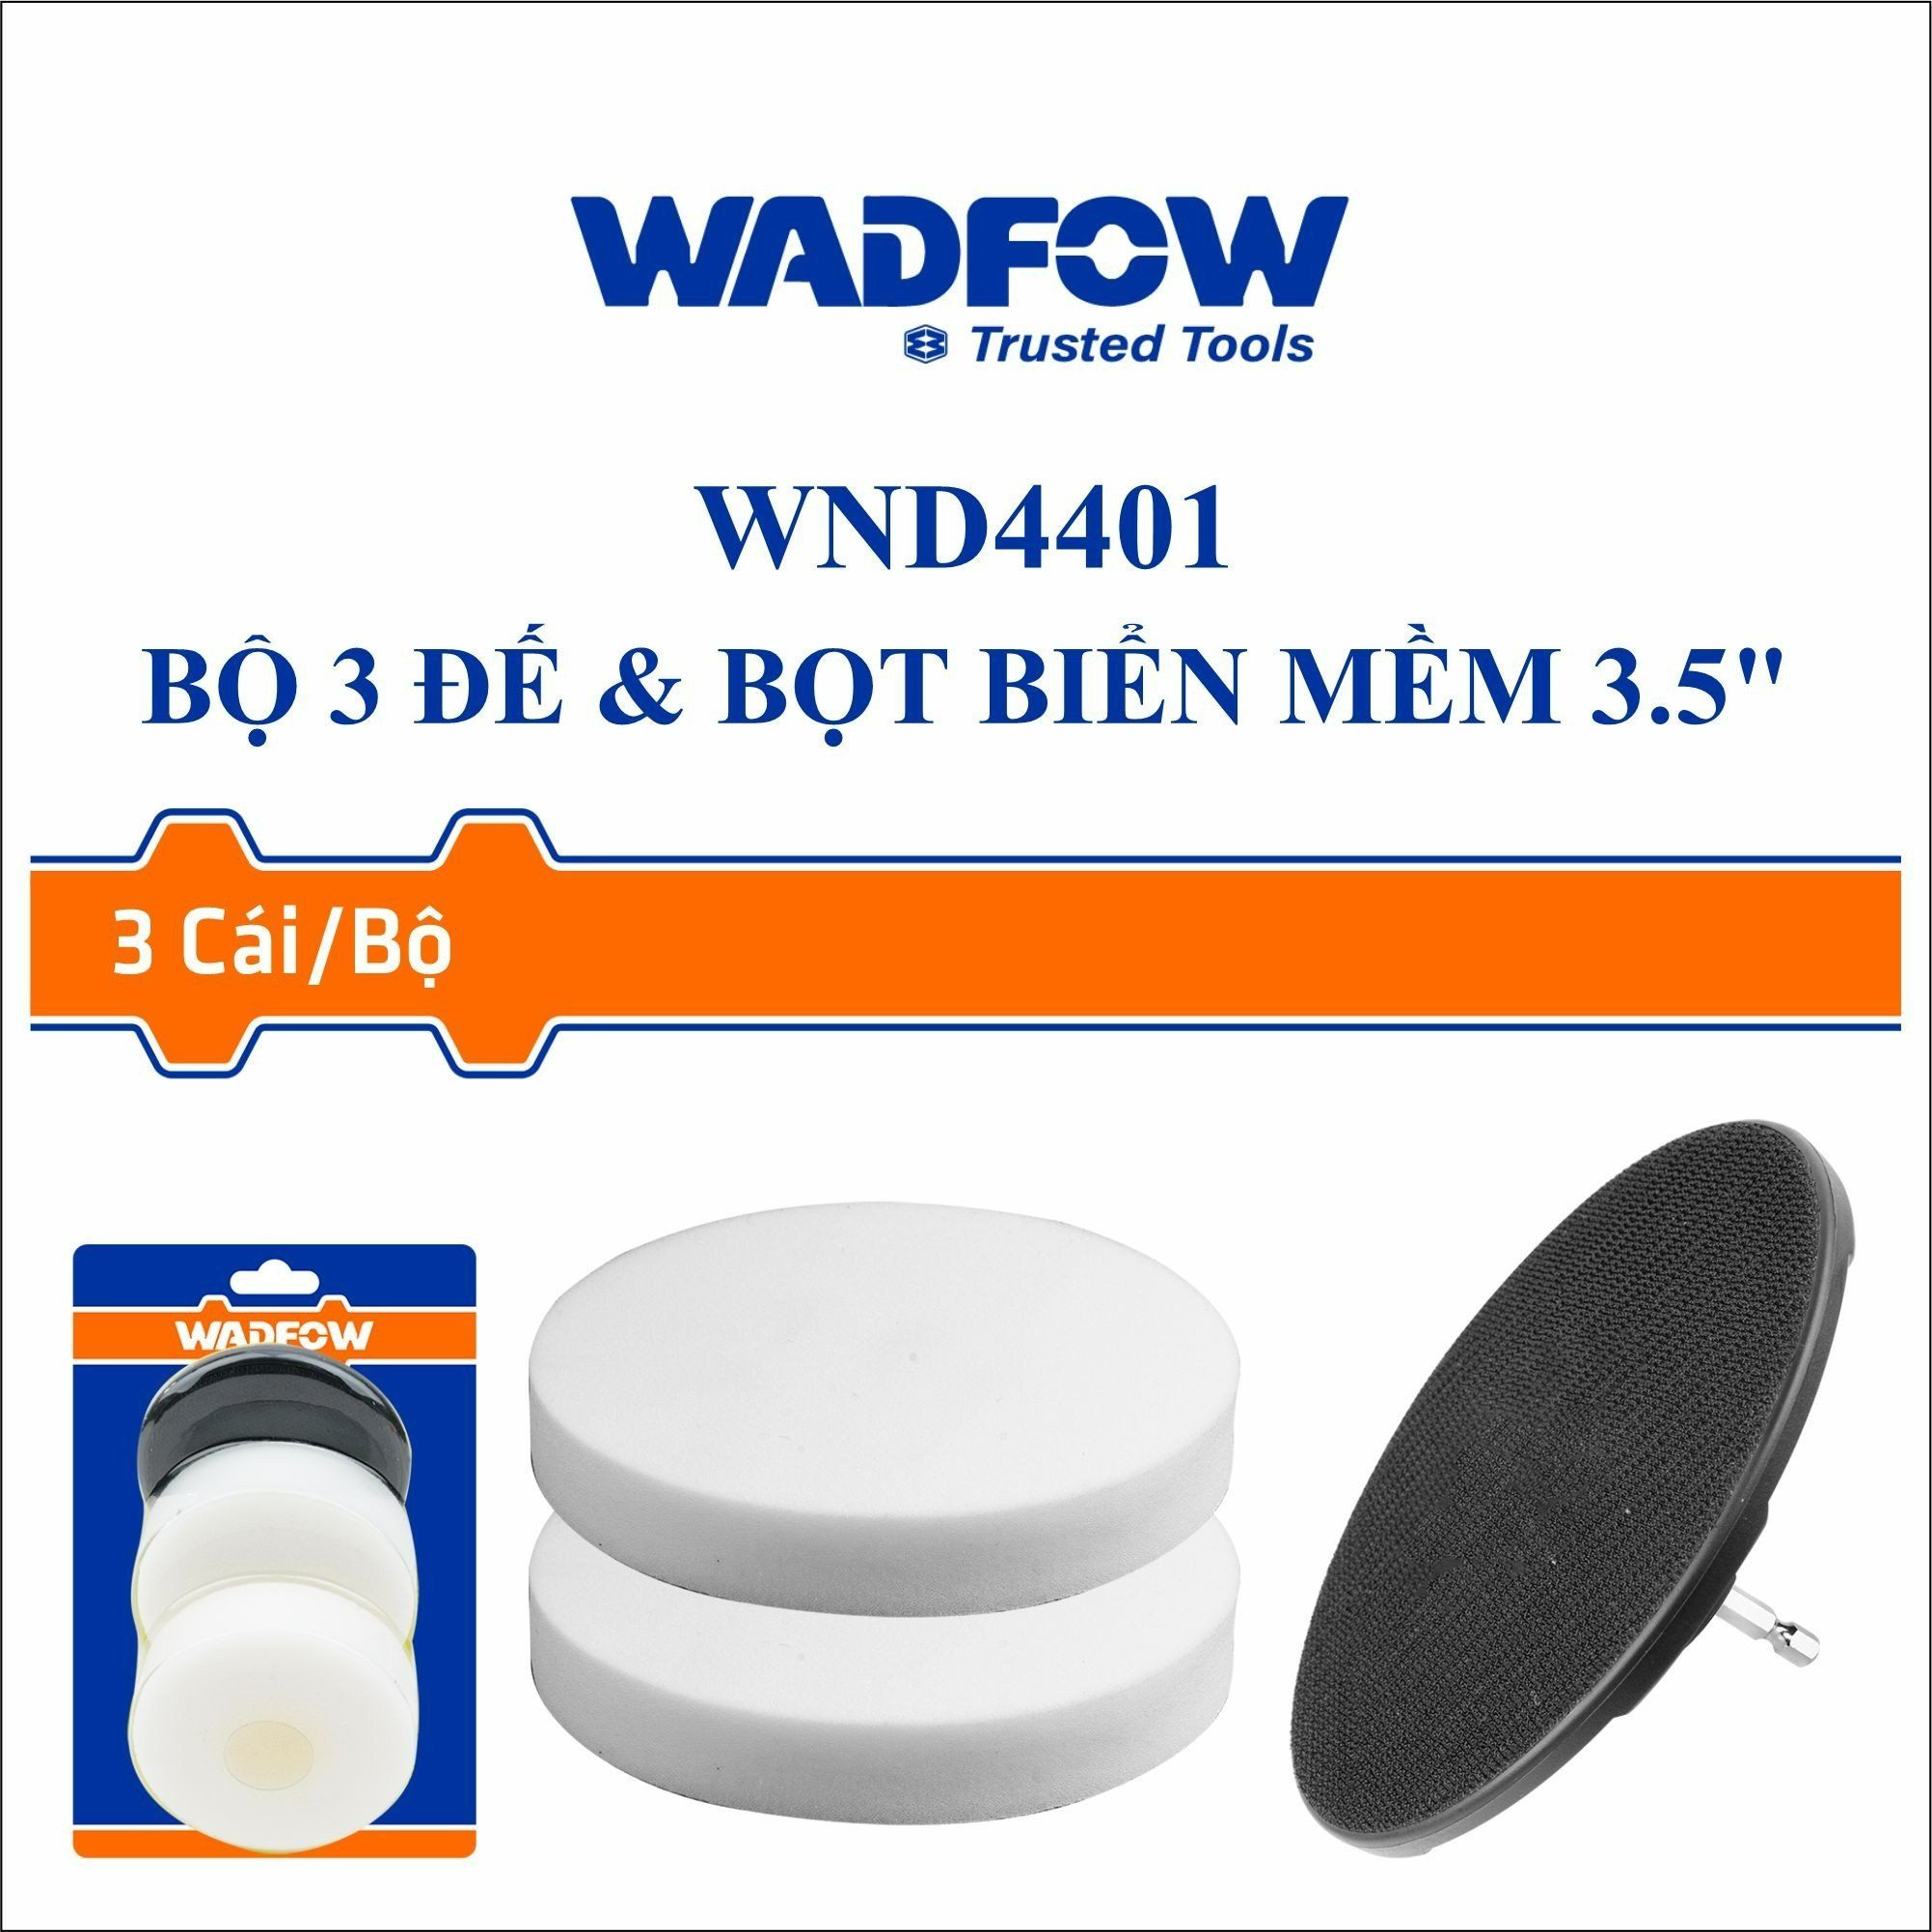  Bộ 3 đế & bọt biển mềm 3.5 Inch WADFOW WND4401 